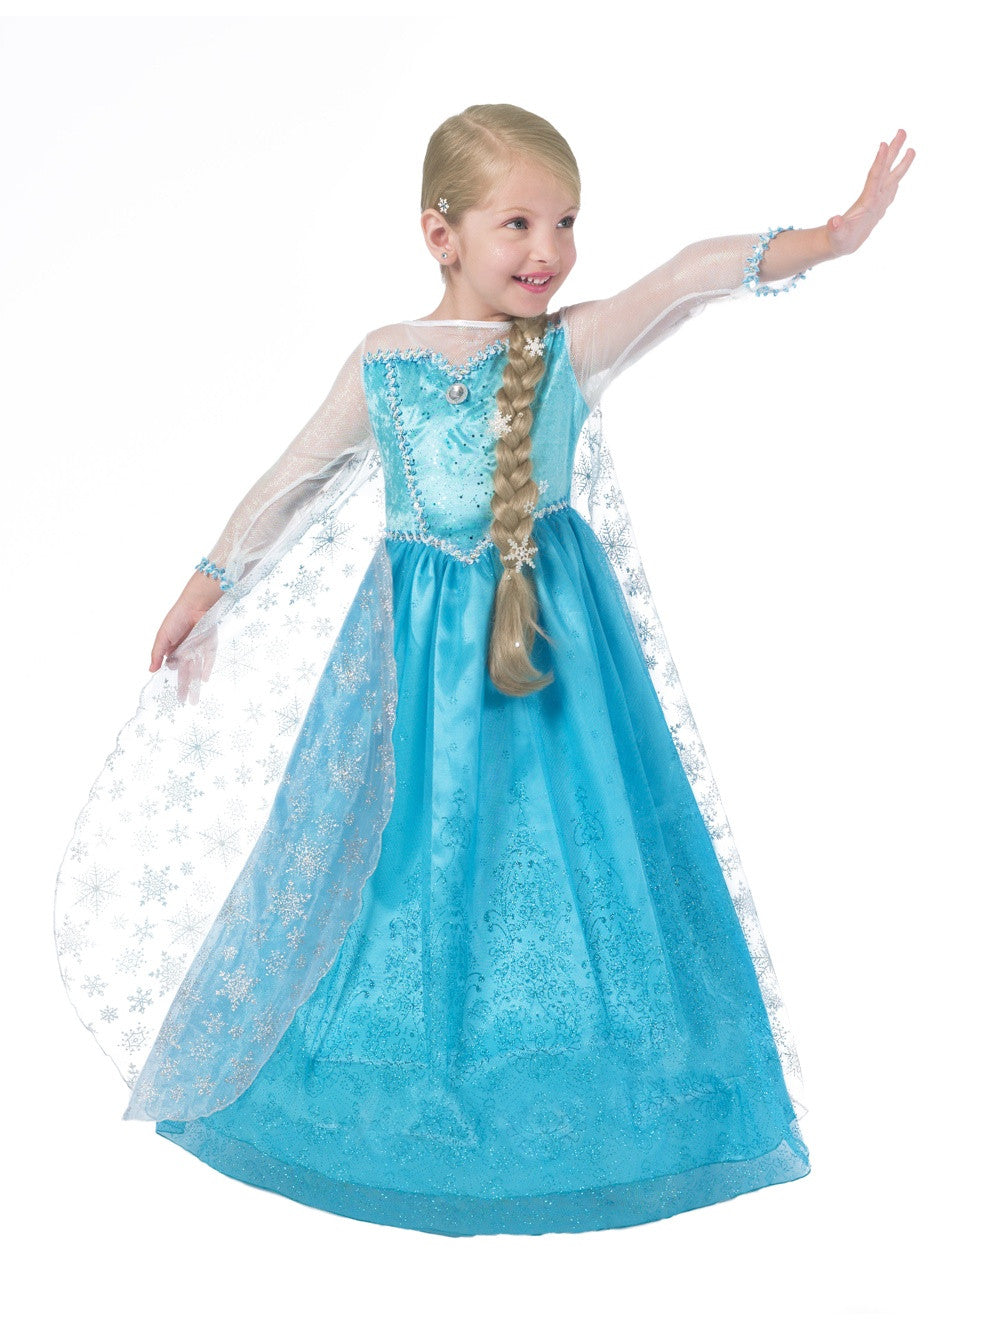 Enchanted Ice Princess Dress | Just Pretend Kids